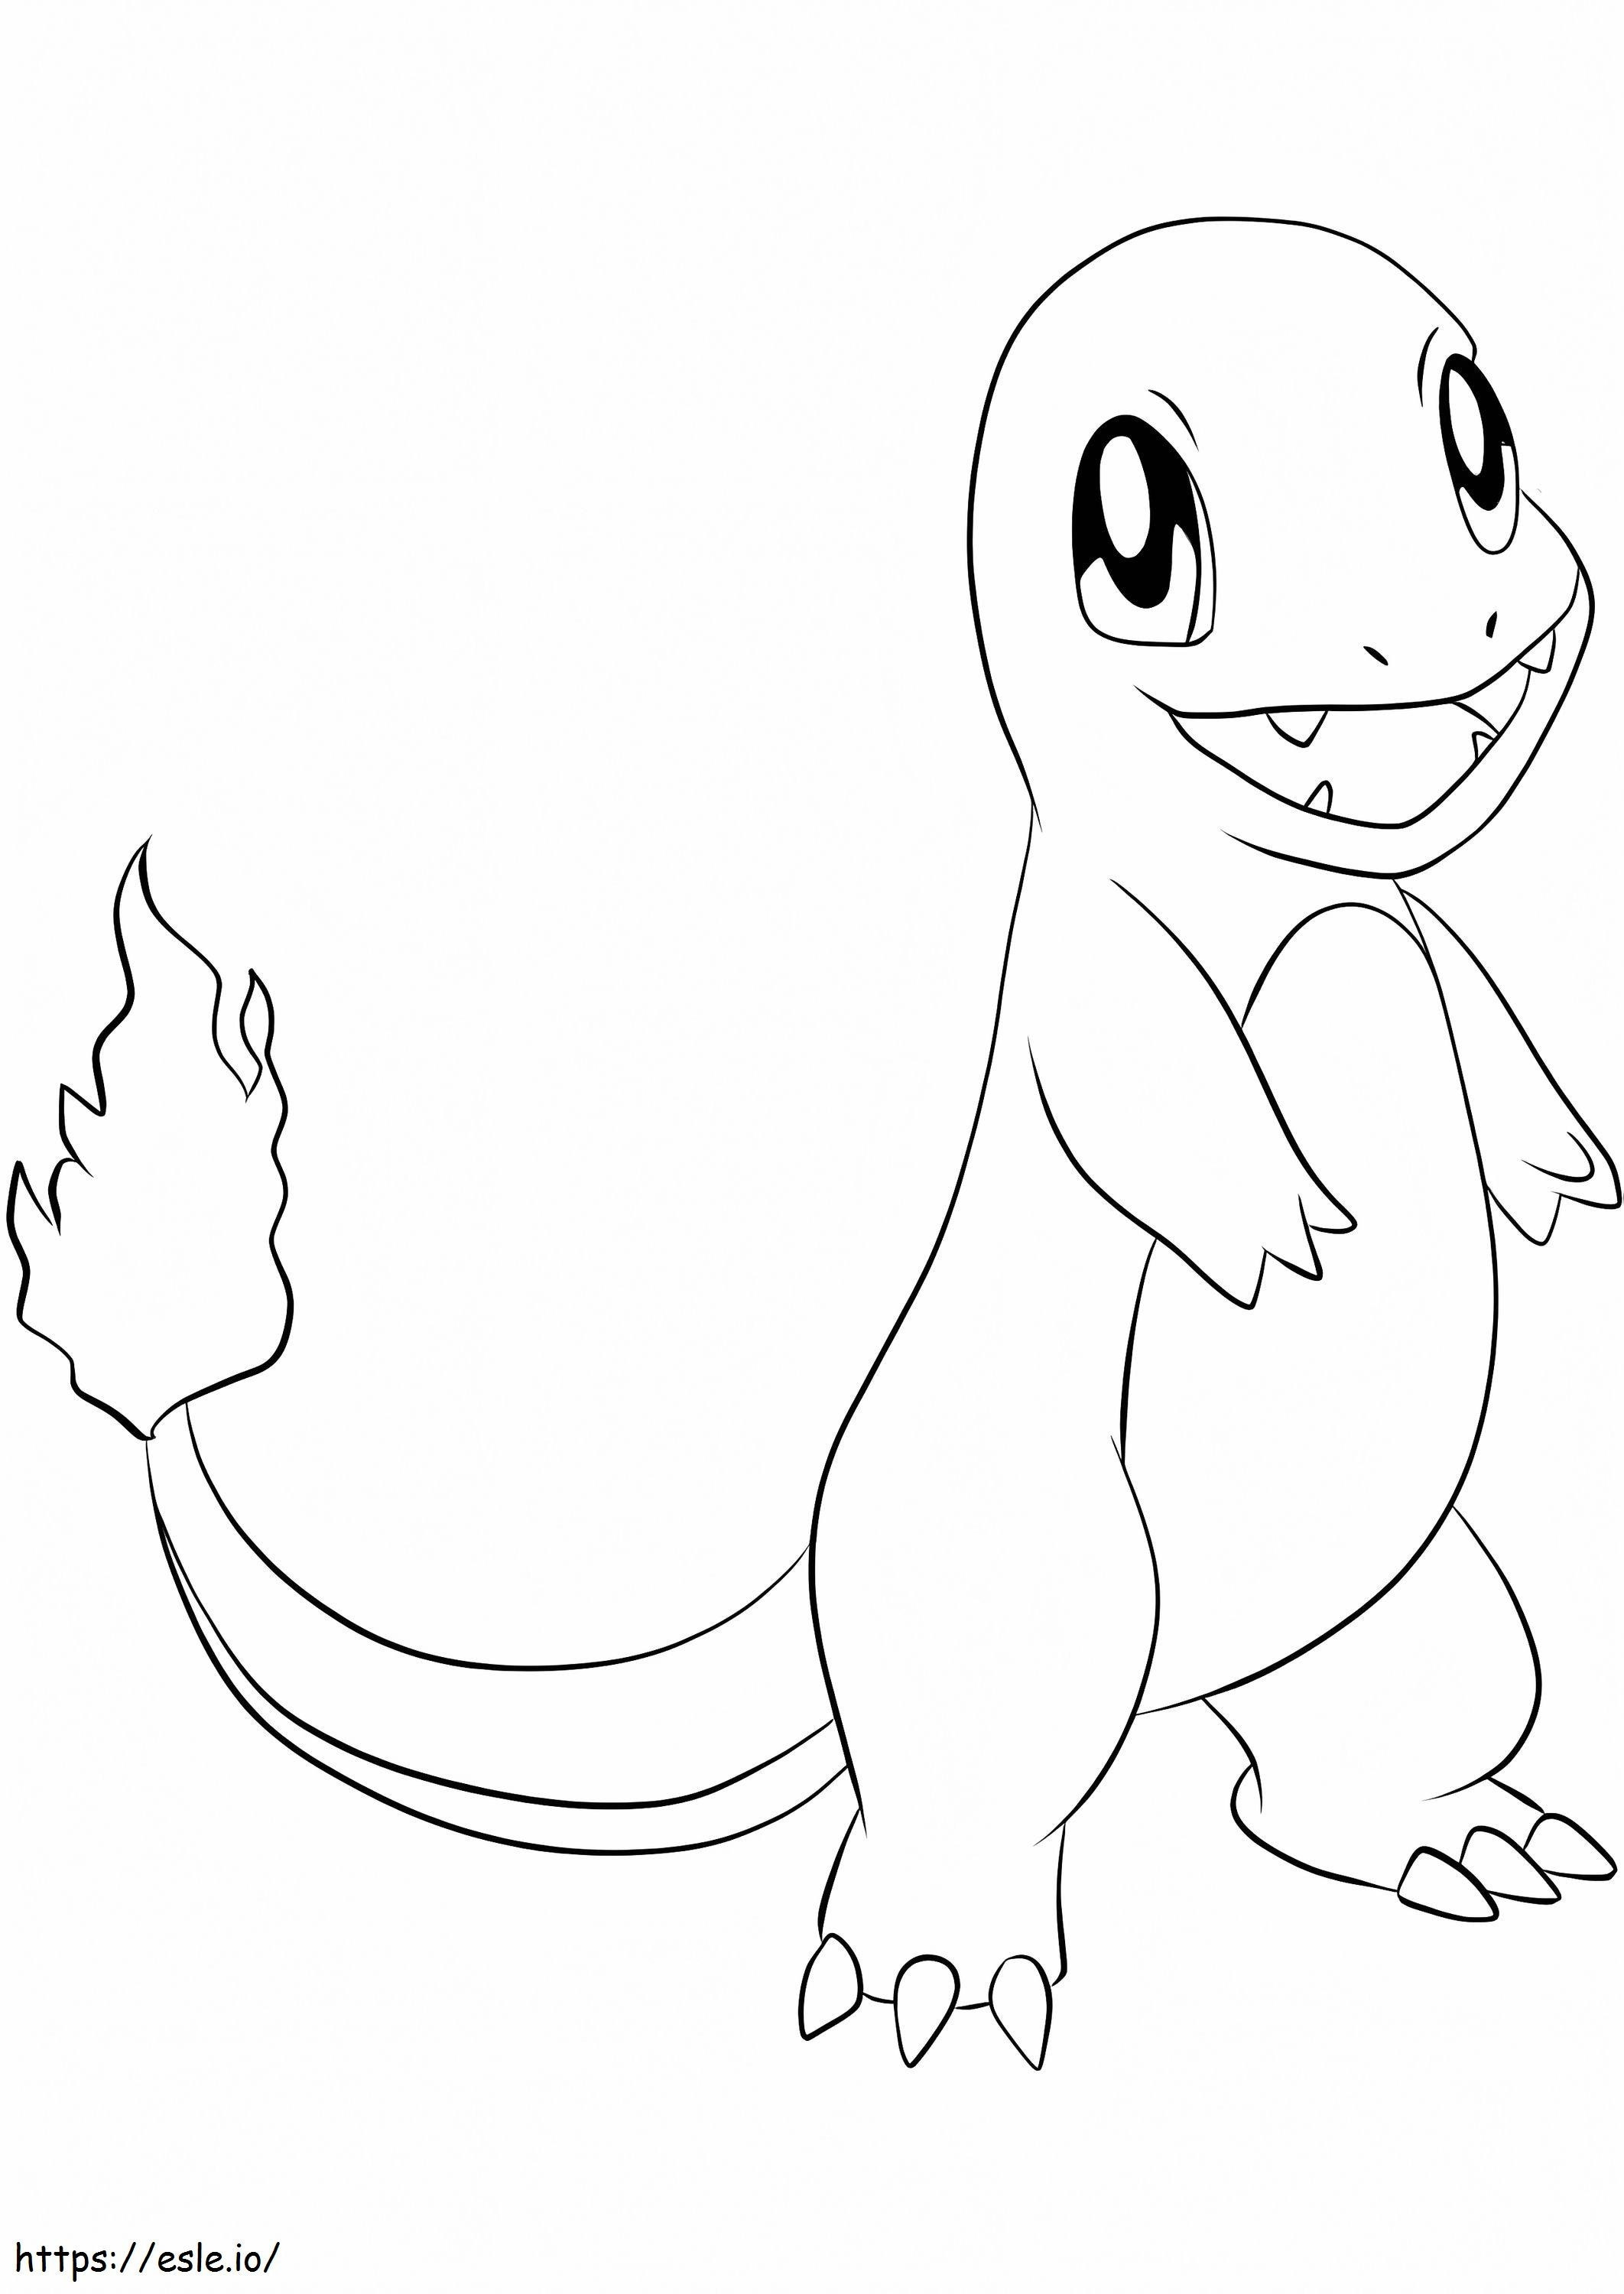 Happy Pokemon Charmander coloring page